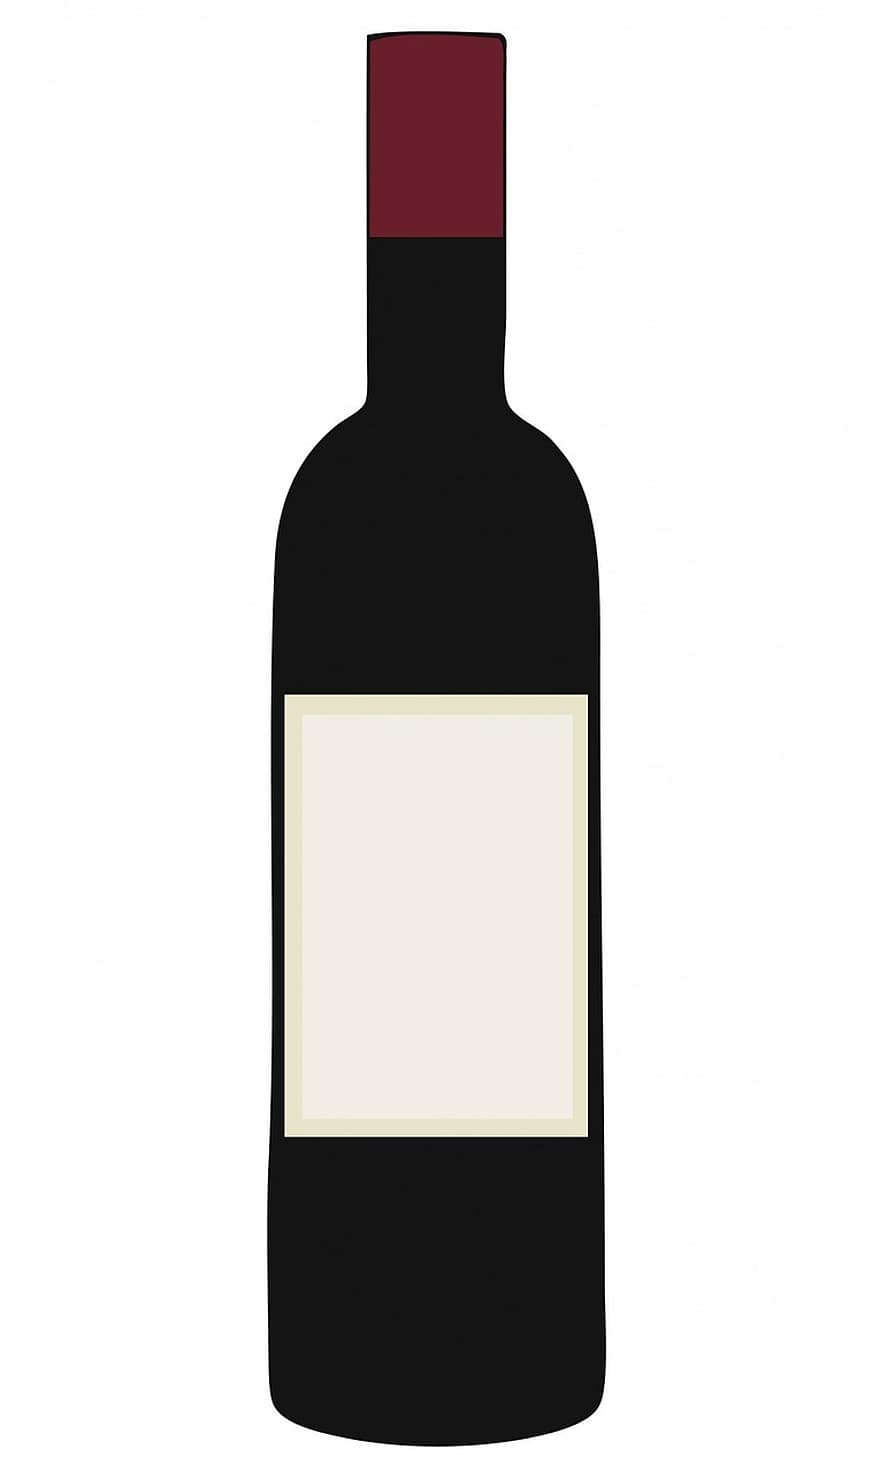 vino, bottiglia, rosso, Bottiglia di vino, vino rosso, vuoto, etichetta, etichetta vuota, Illustrazione di vetro